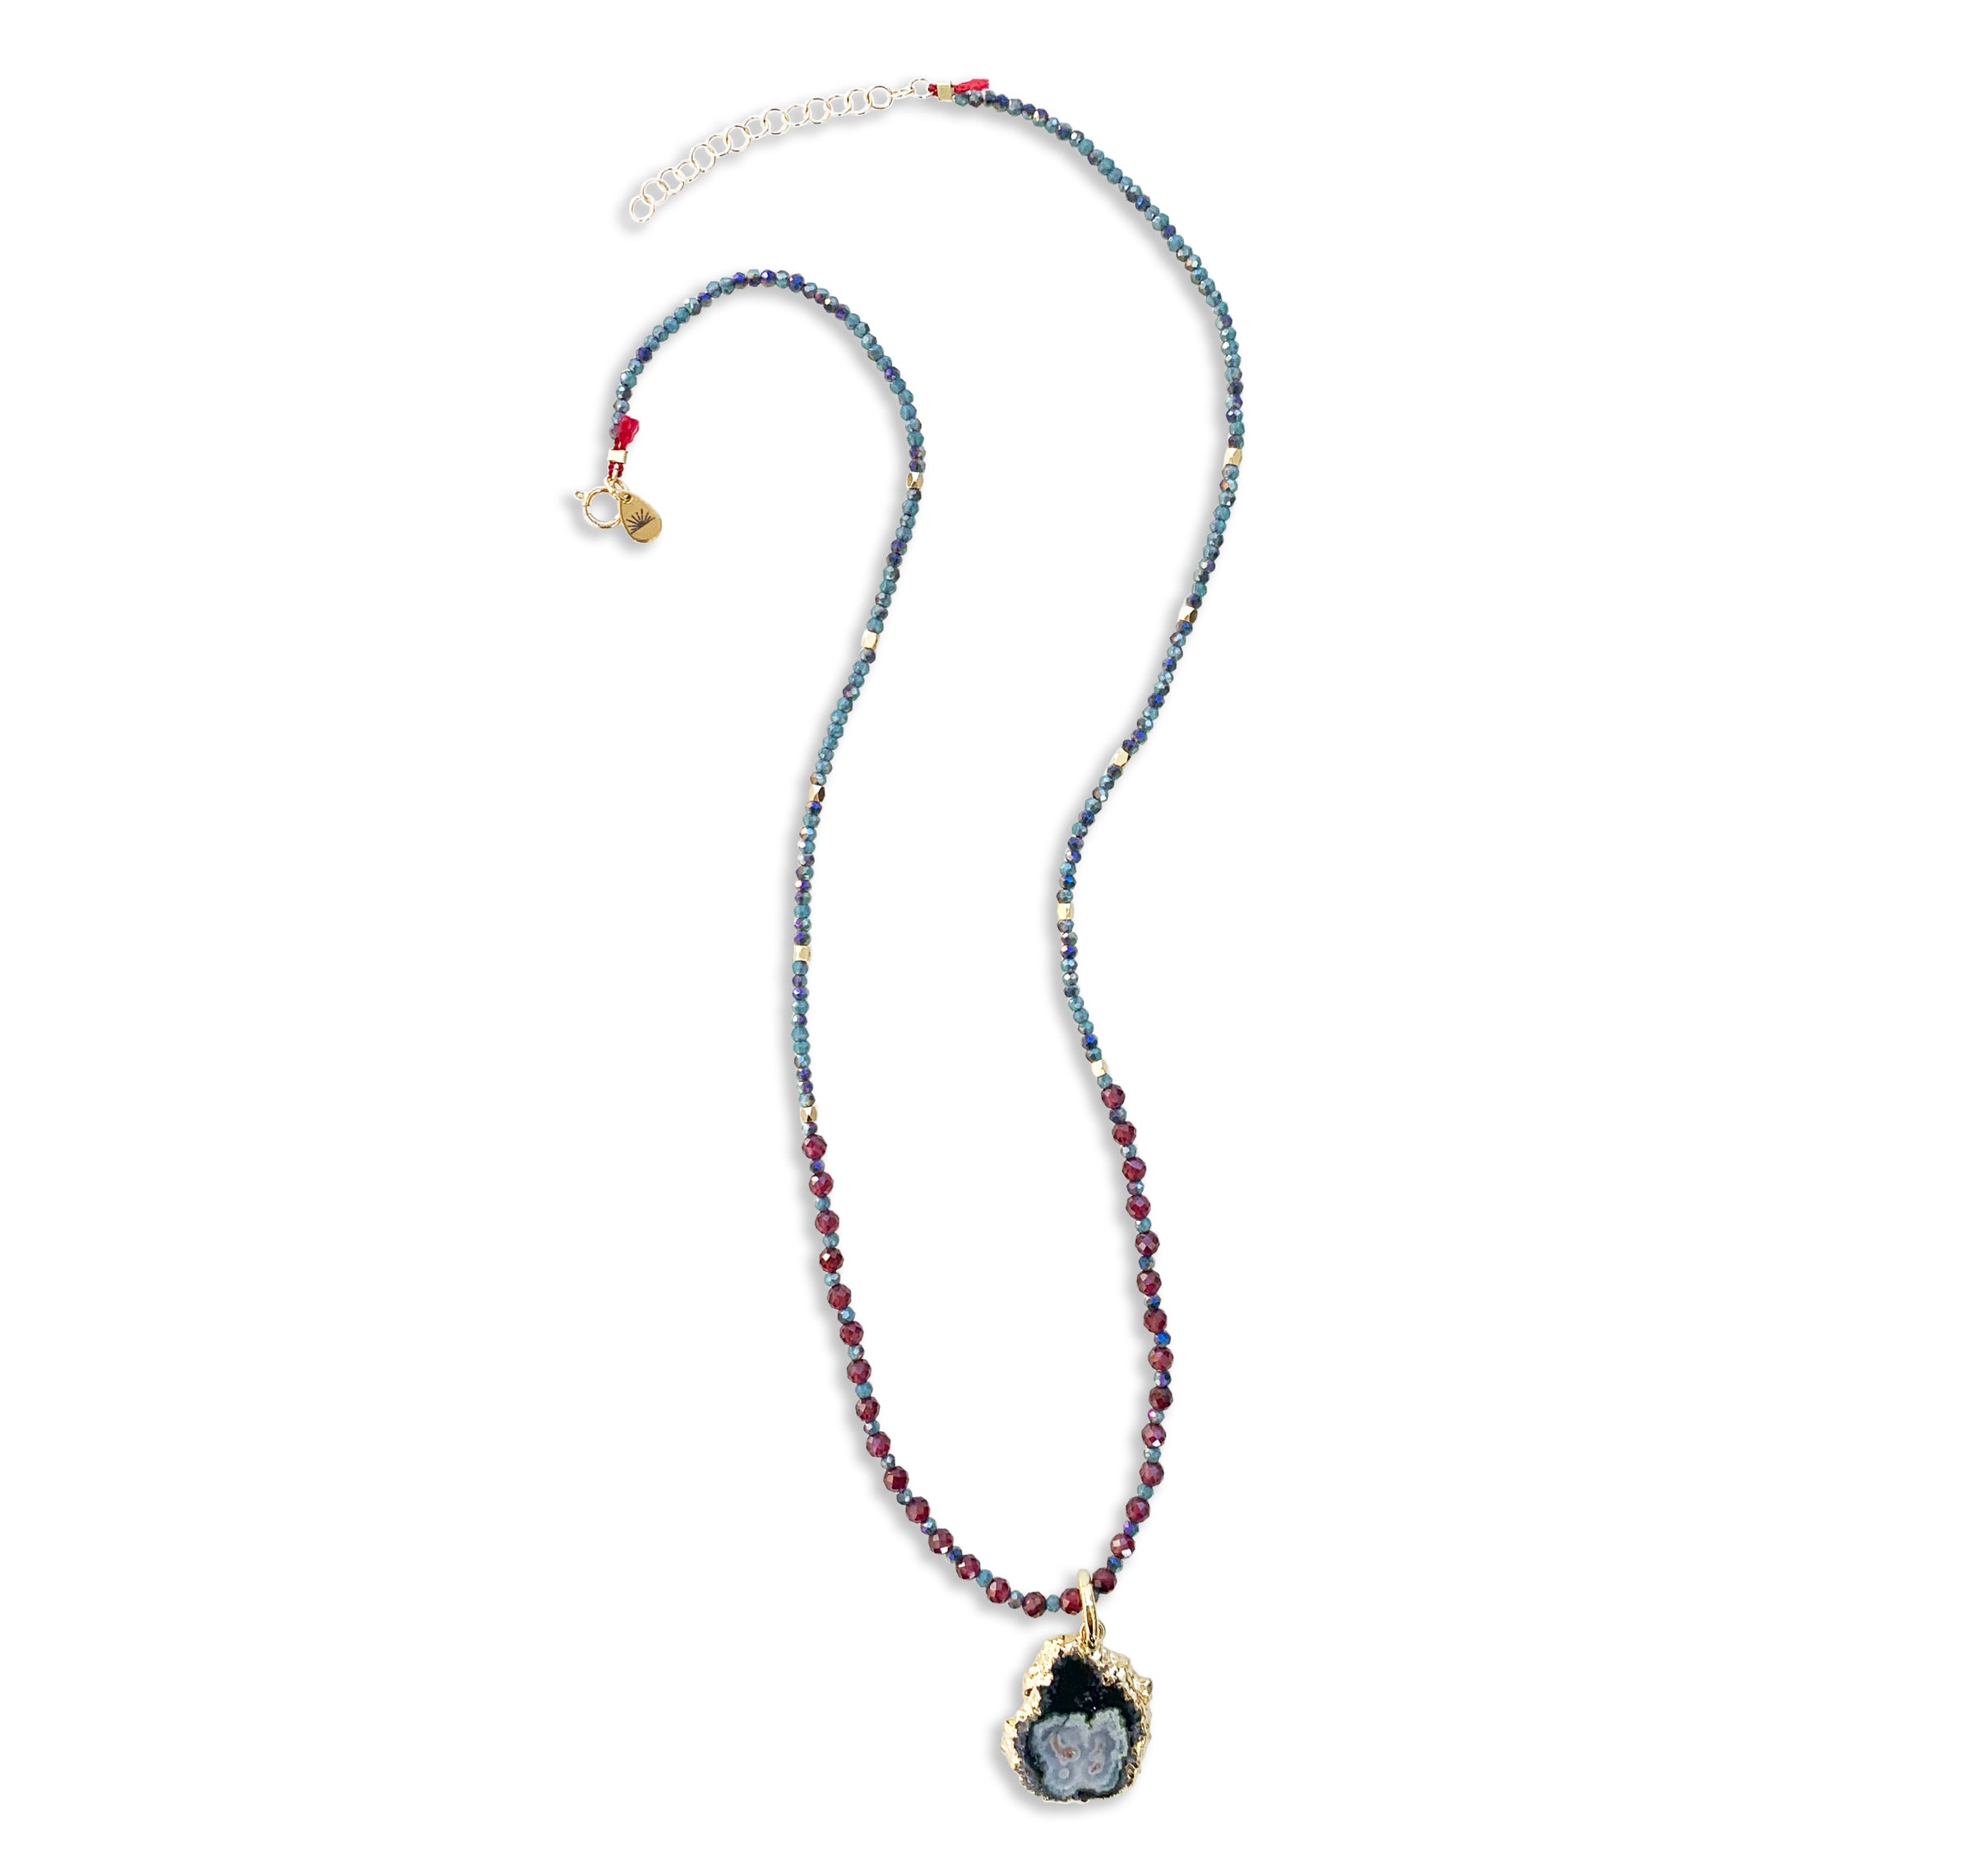 Cast-of-Stones-Garnet-Necklace-with-Stalactite-Medium-Charm